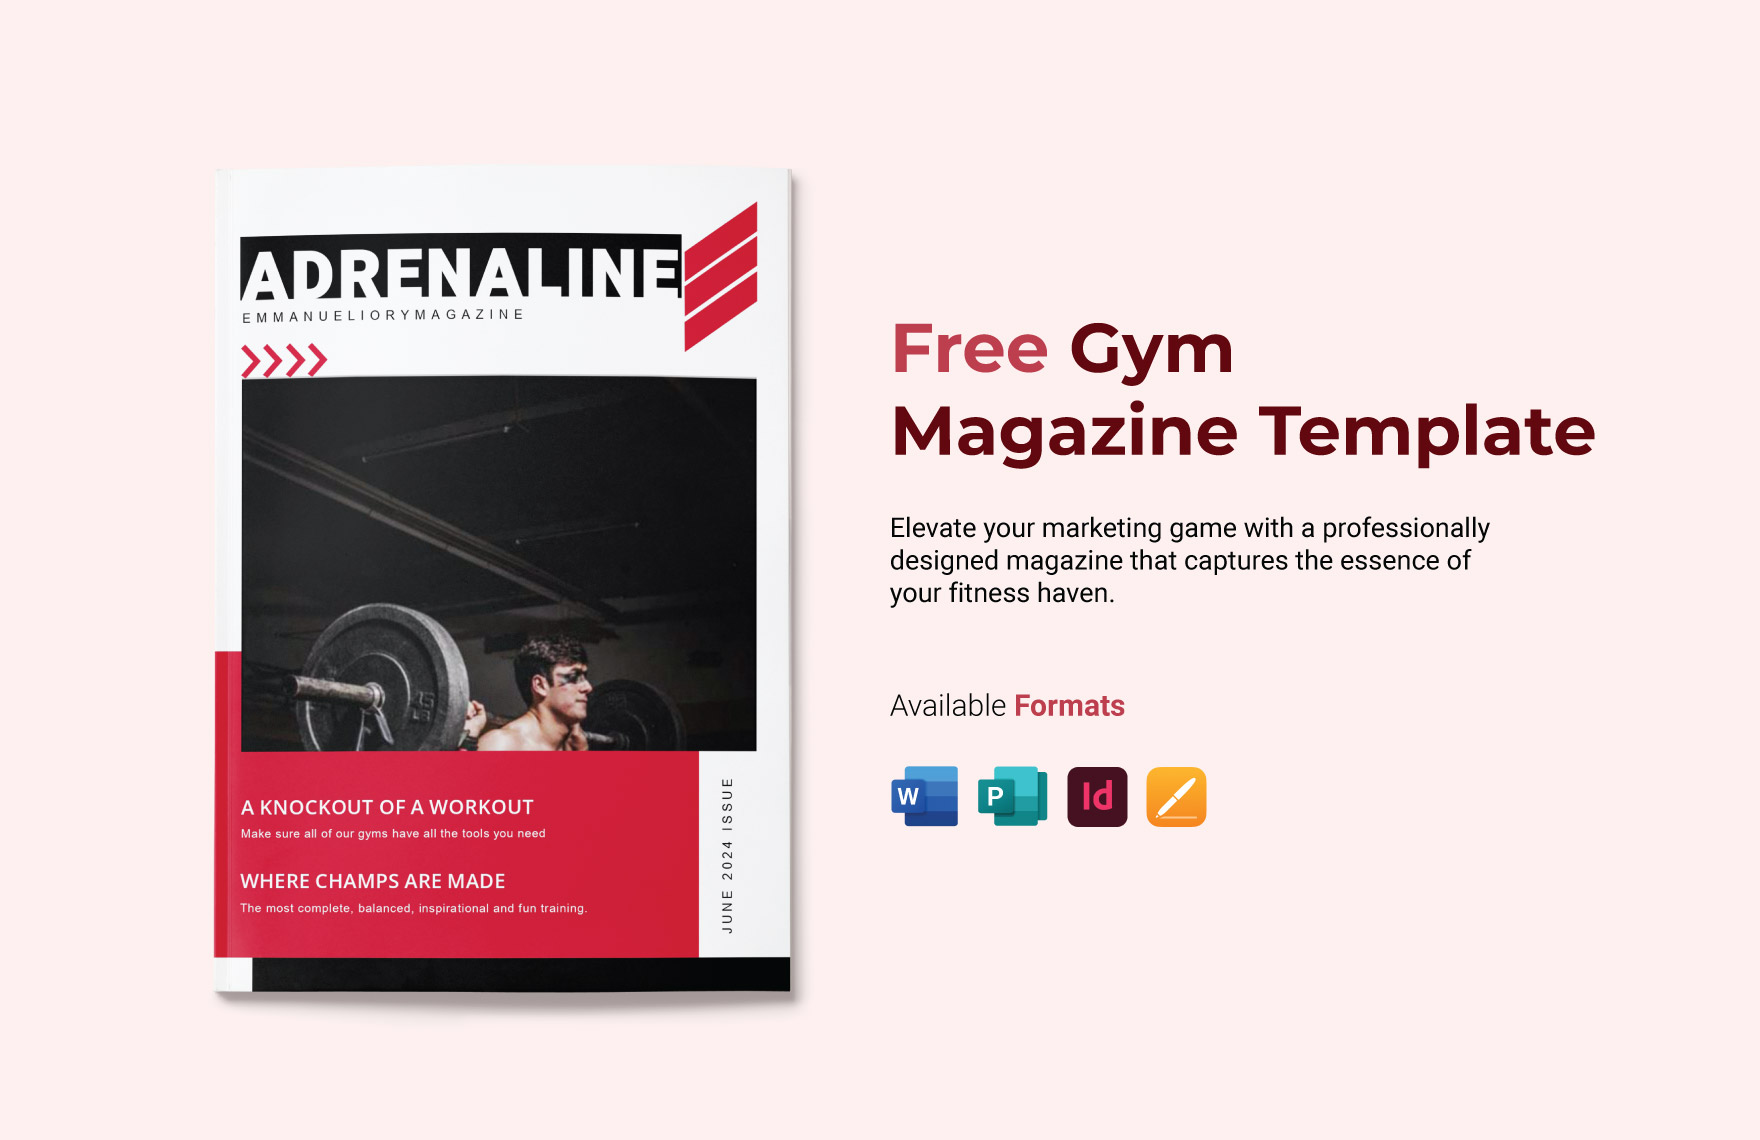 Gym Magazine Template